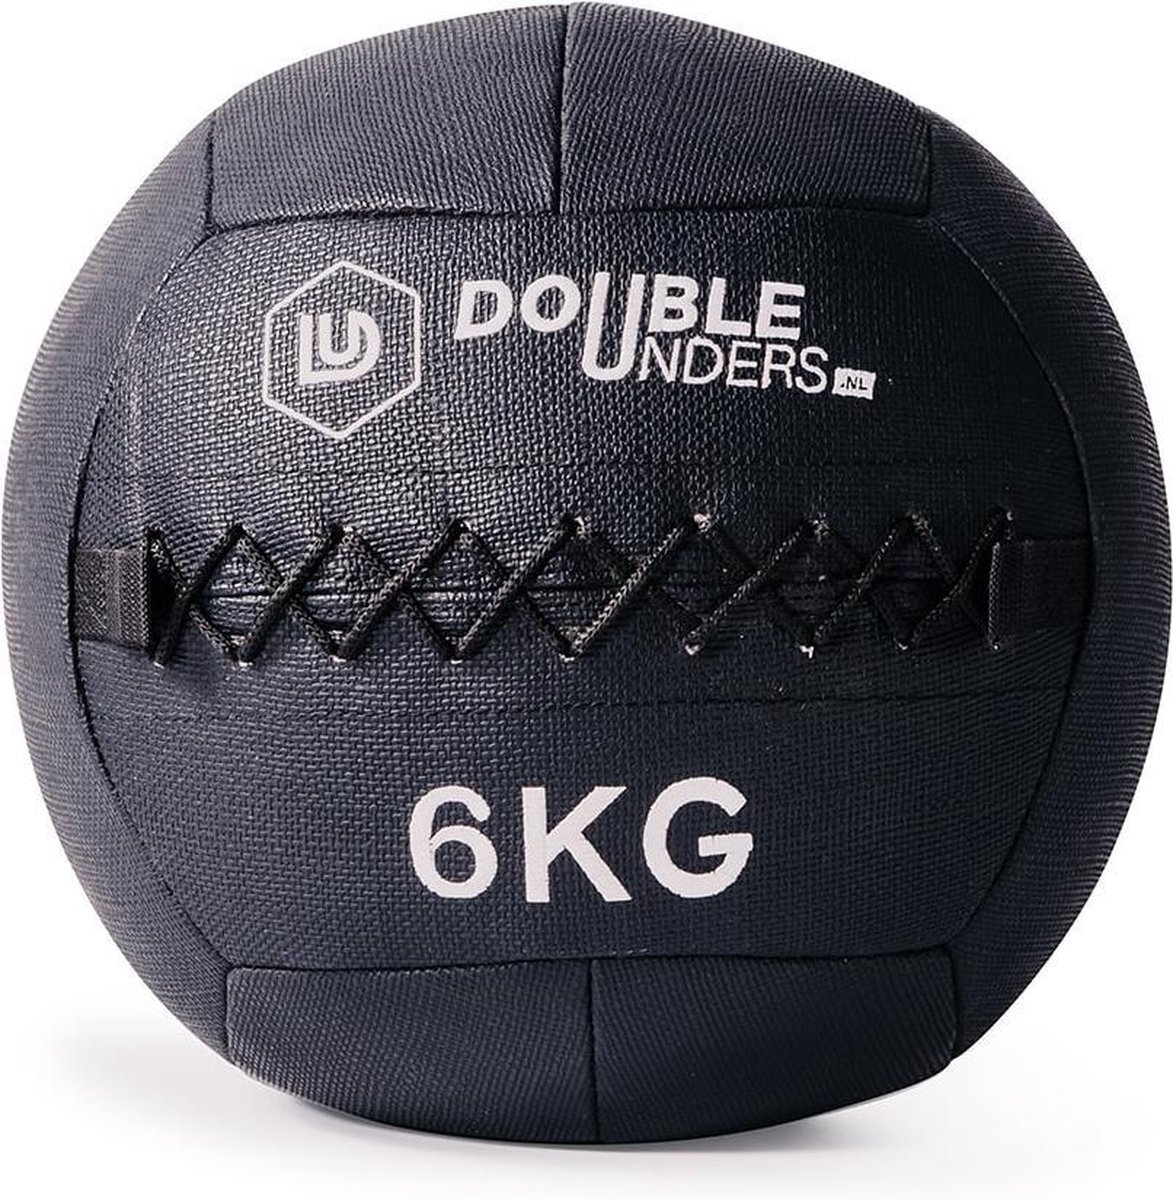 DoubleUnders - Wall ball 6kg zwart - Professionele wall ball voor Crossfit